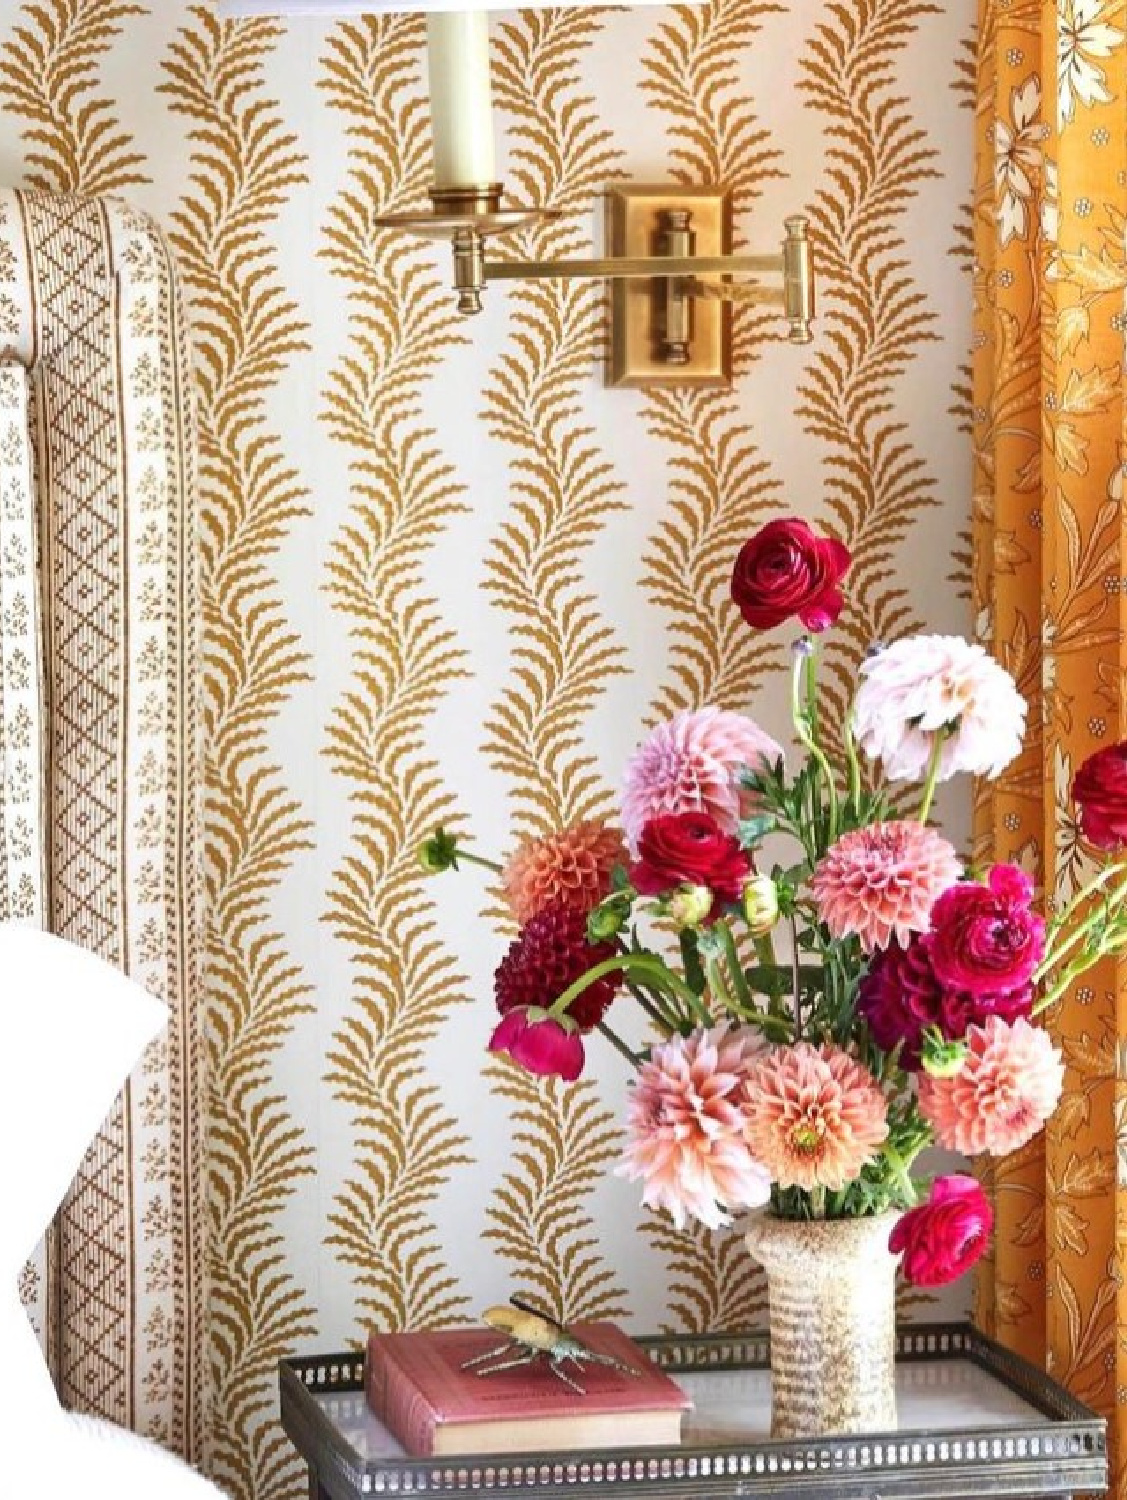 Summer Thornton designed bedroom with marigold wallpaper and bright pink floral arrangement. #bedroomwallpaper